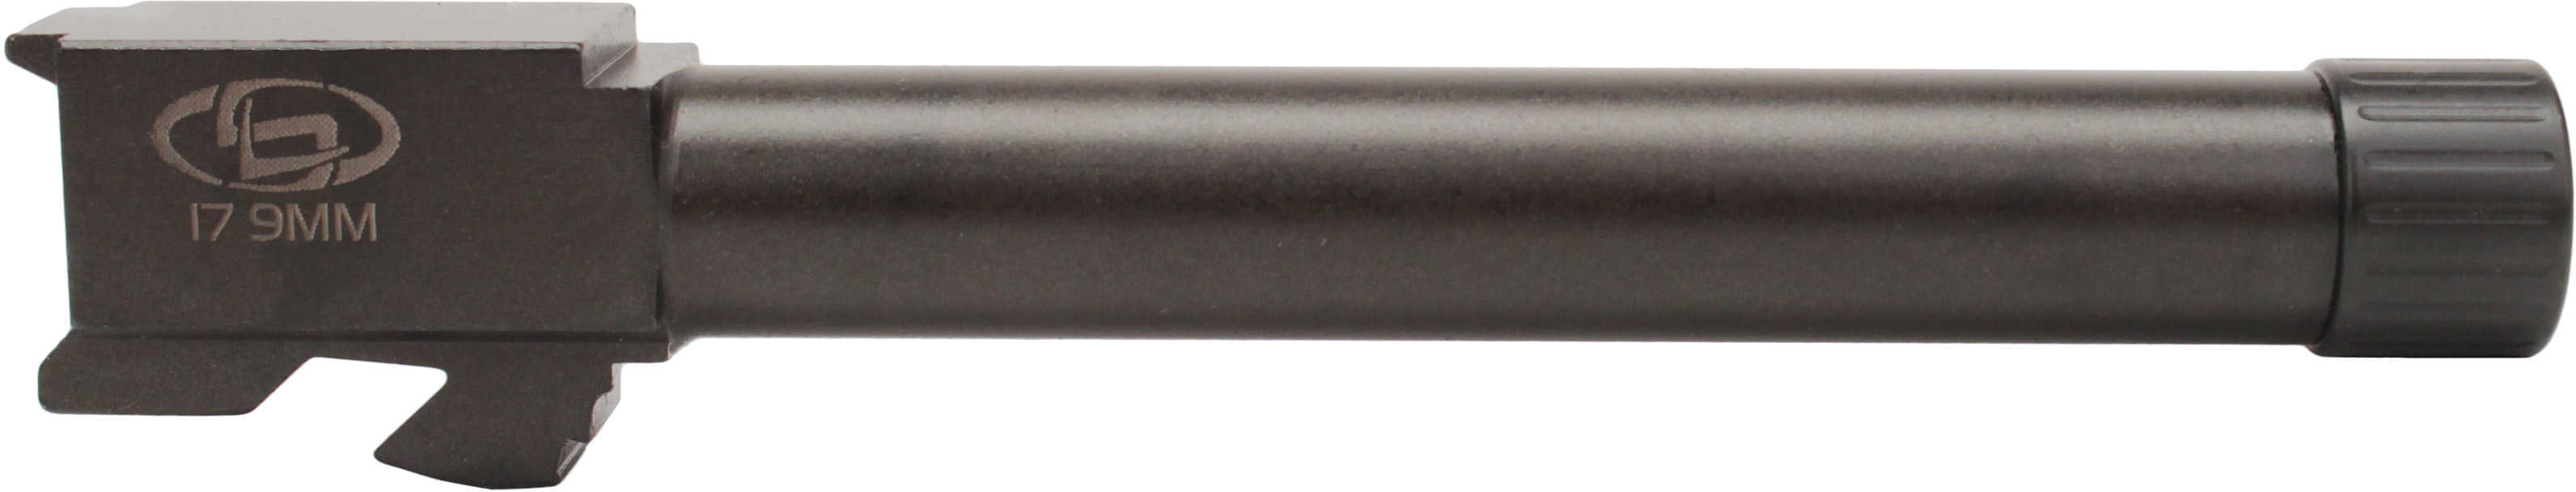 Storm Lake Barrels 9MM 5.19" Fits Glock 17 Black Isonite QPQ Finish 1/2-28 Thread With Protec